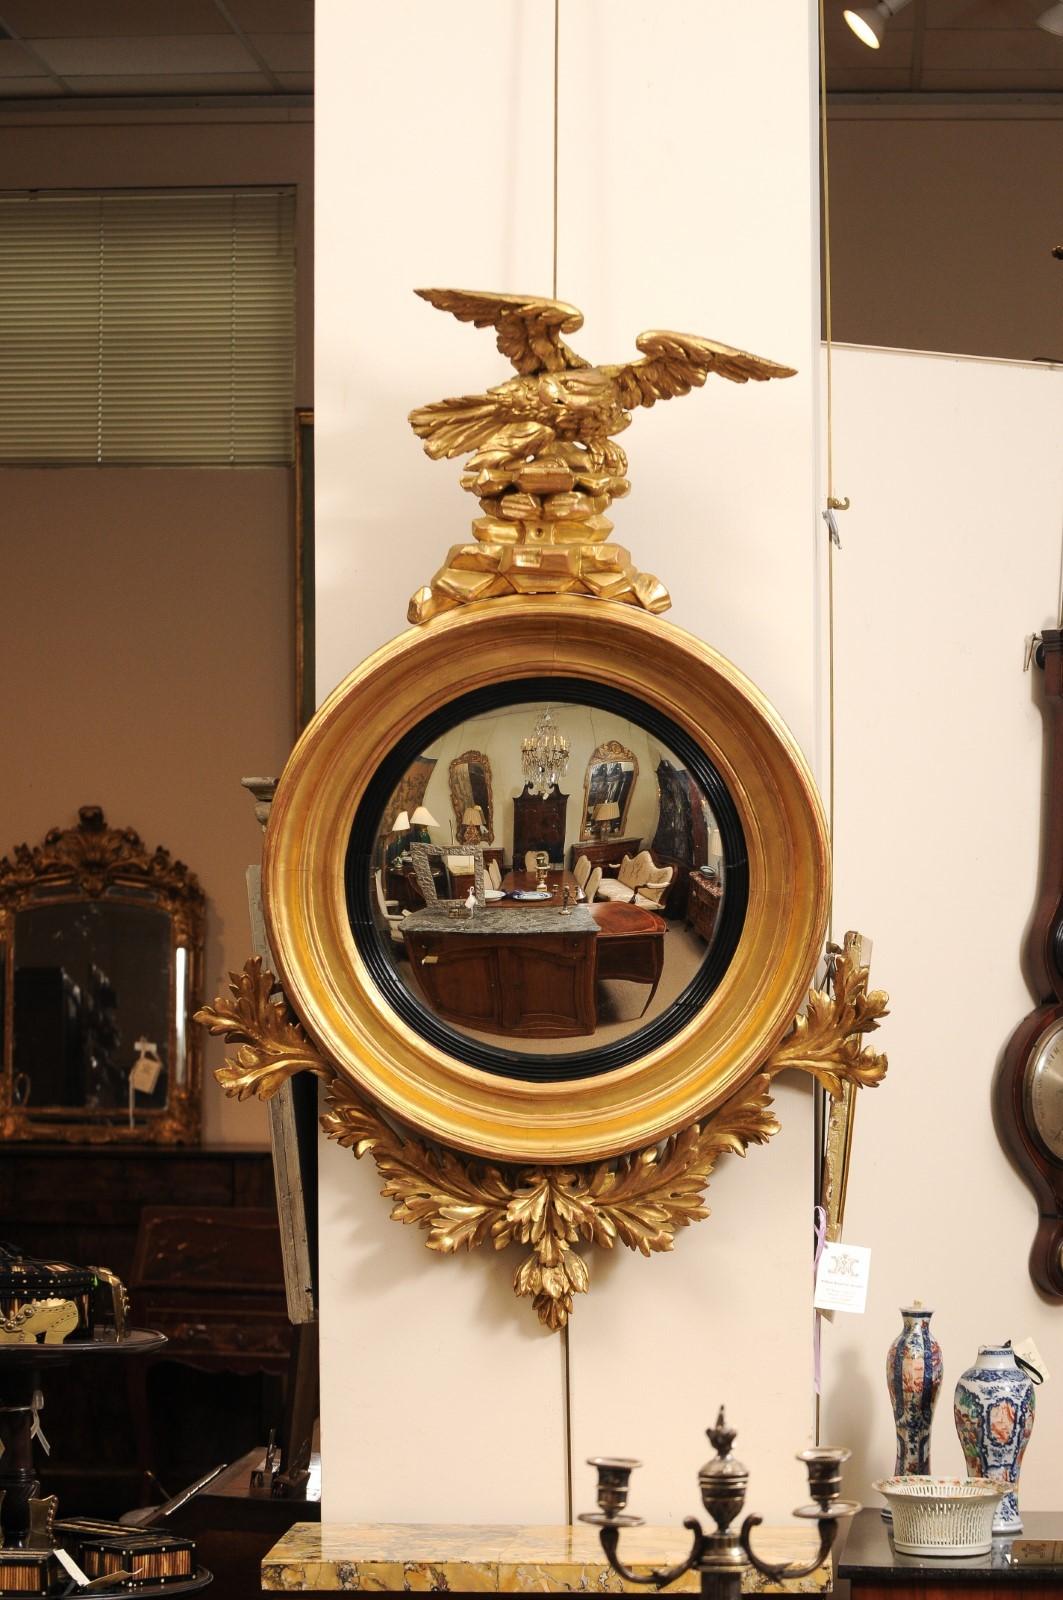 
19th Century English Giltwood Bull’s Eye Mirror with Eagle Crest & Convex Mirror